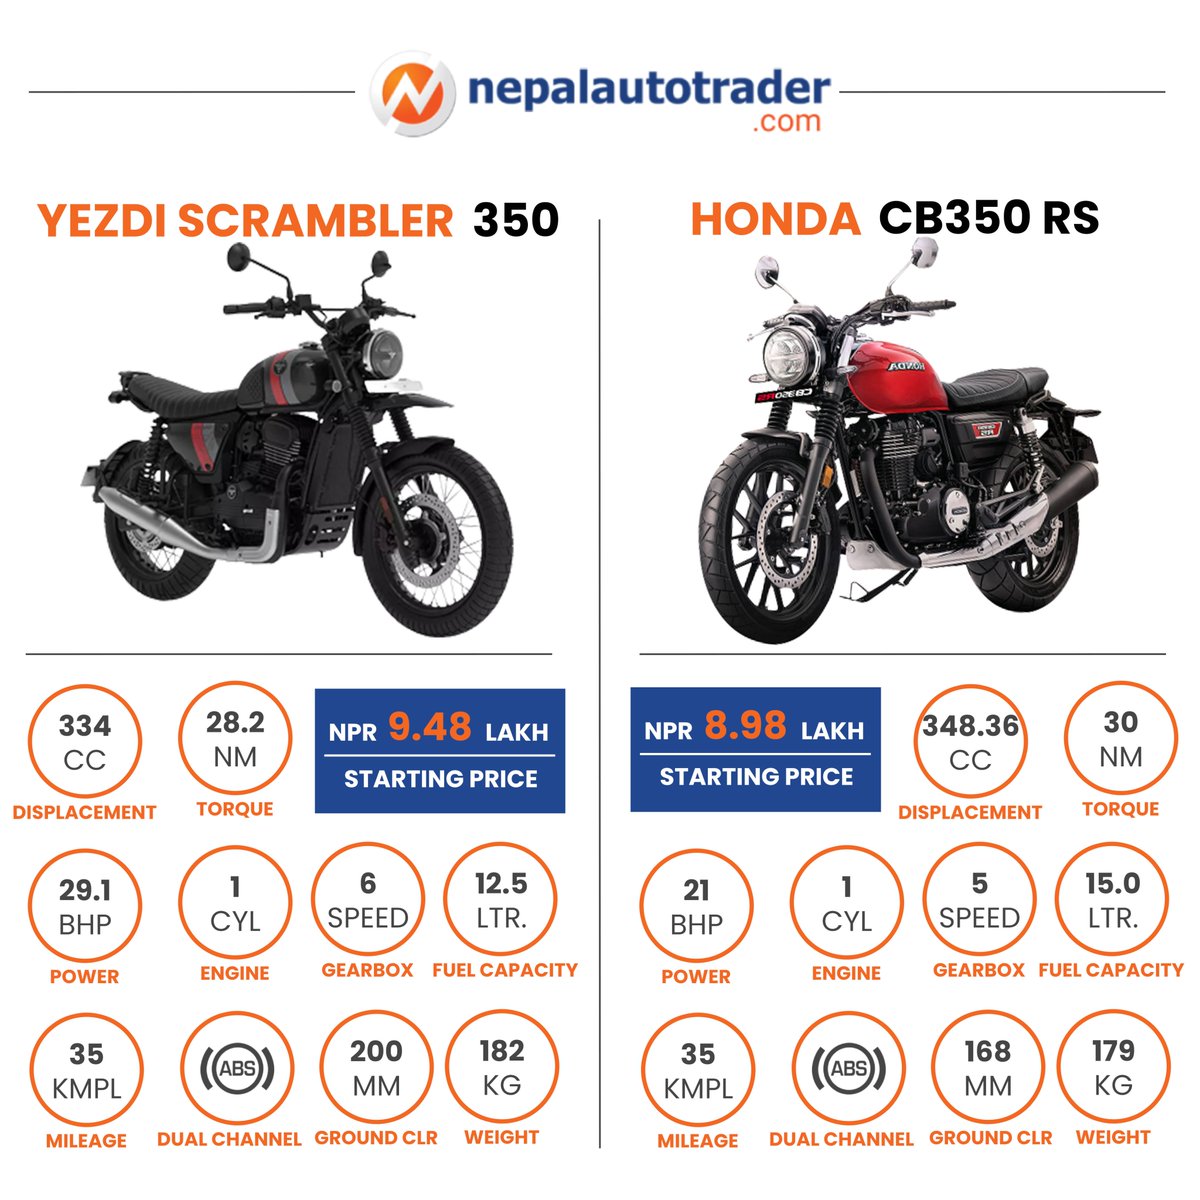 Here is a quick comparison between Yezdi Scrambler and Honda CB350 RS. #Autonews #AutonewsNepal #Bikes #BikesNepal #YezdiBikes #YezdiNepal #YezdiScrambler #YezdiScrambler350 #HondaBikes #HondaNepal #HondaCB350 #HondaCB350RS #Nepalautotrader